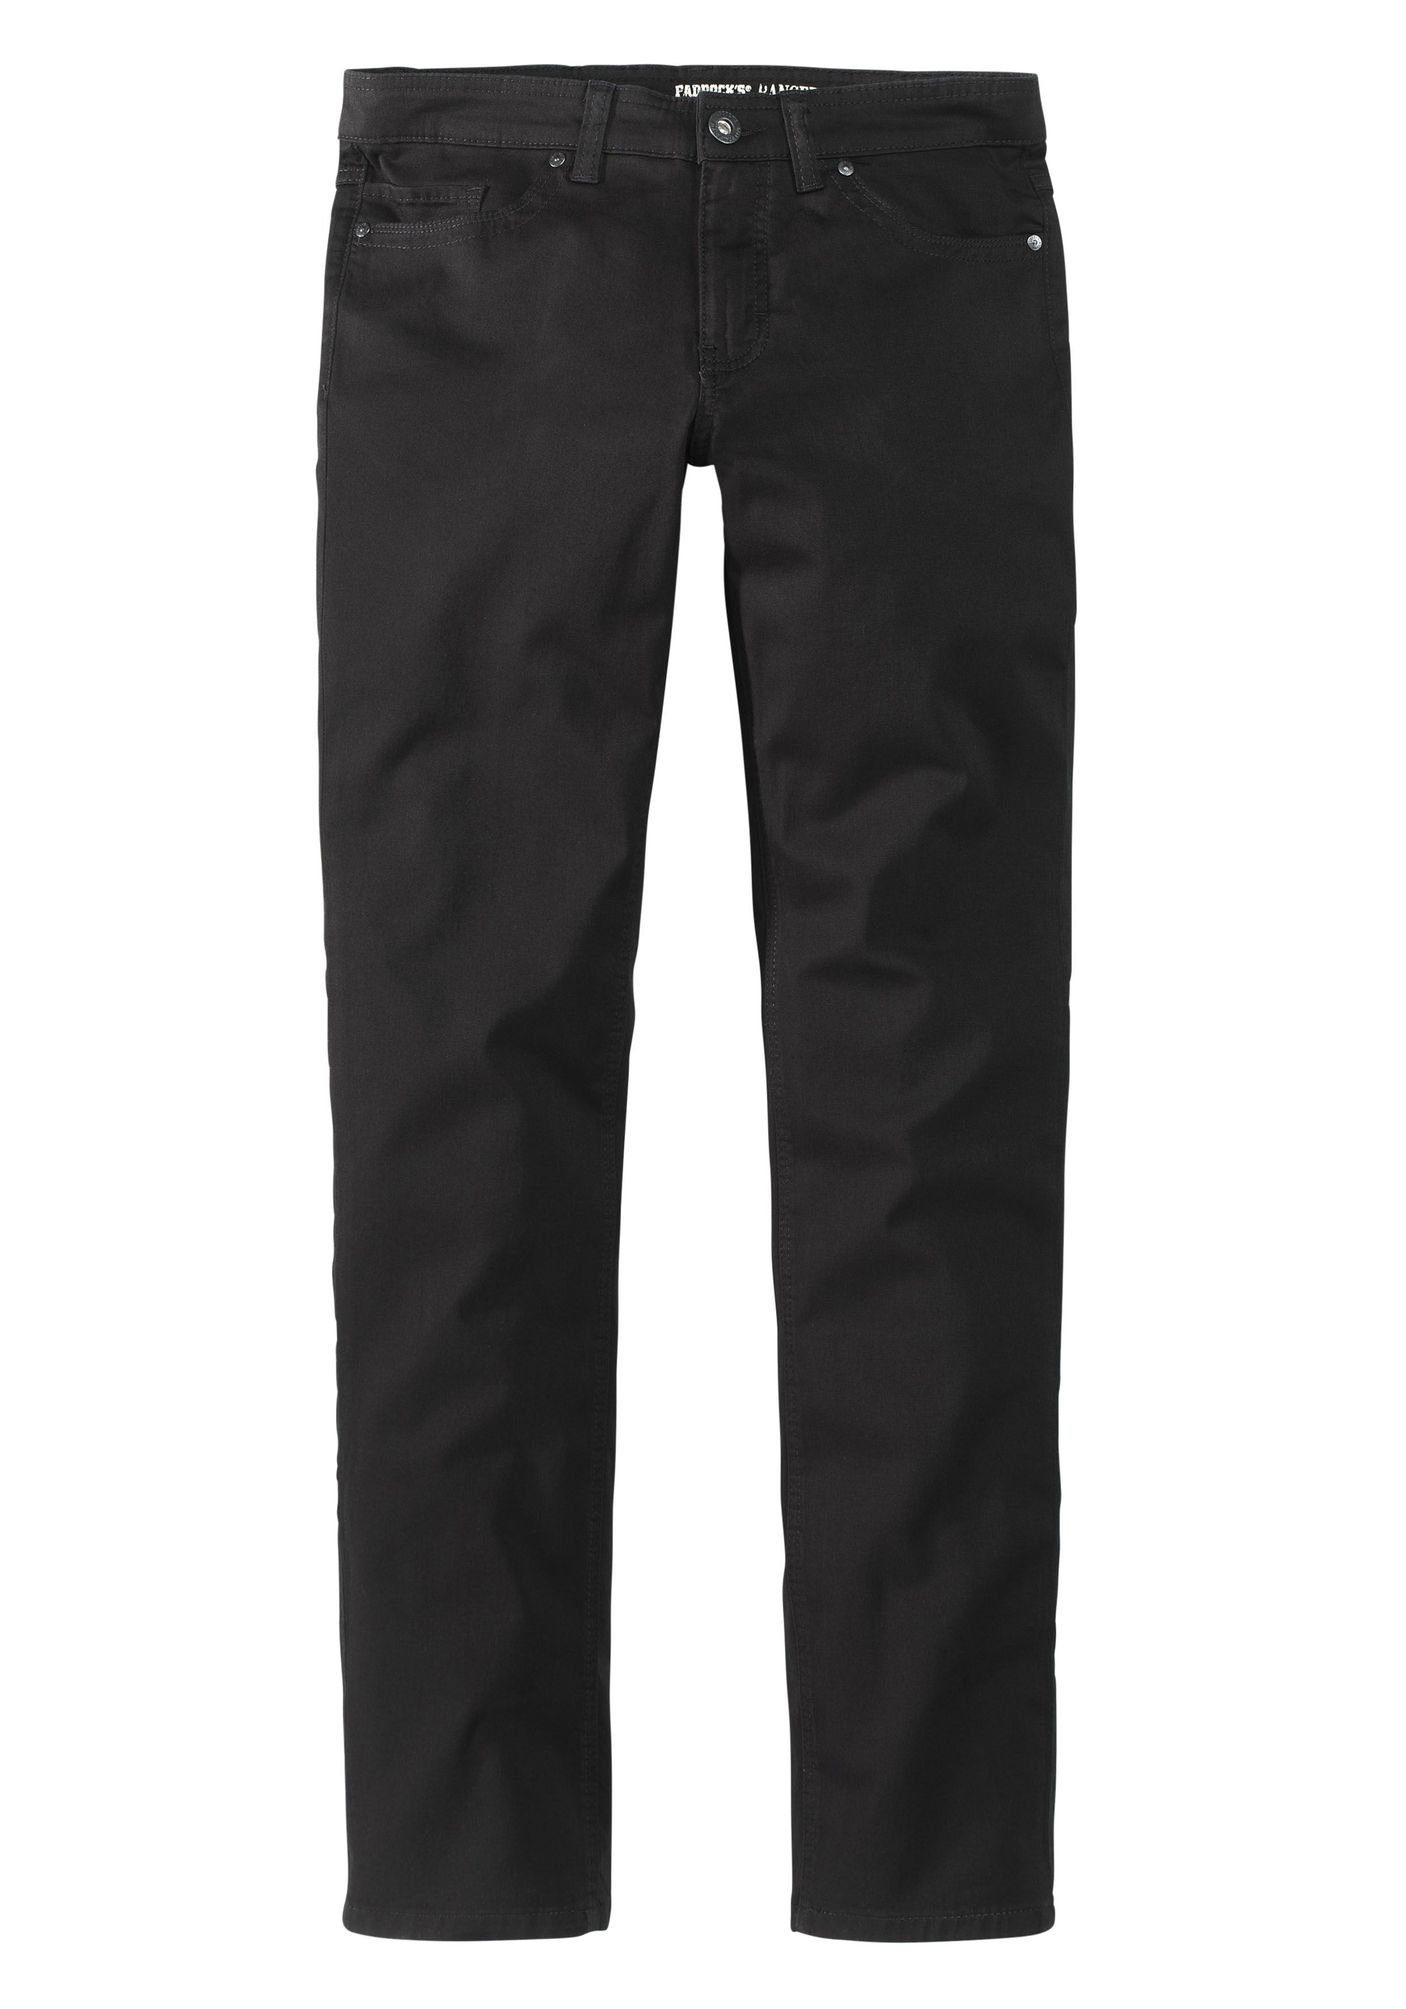 Paddock's (801201496000) 5-Pocket-Jeans black Pipe Ranger deep